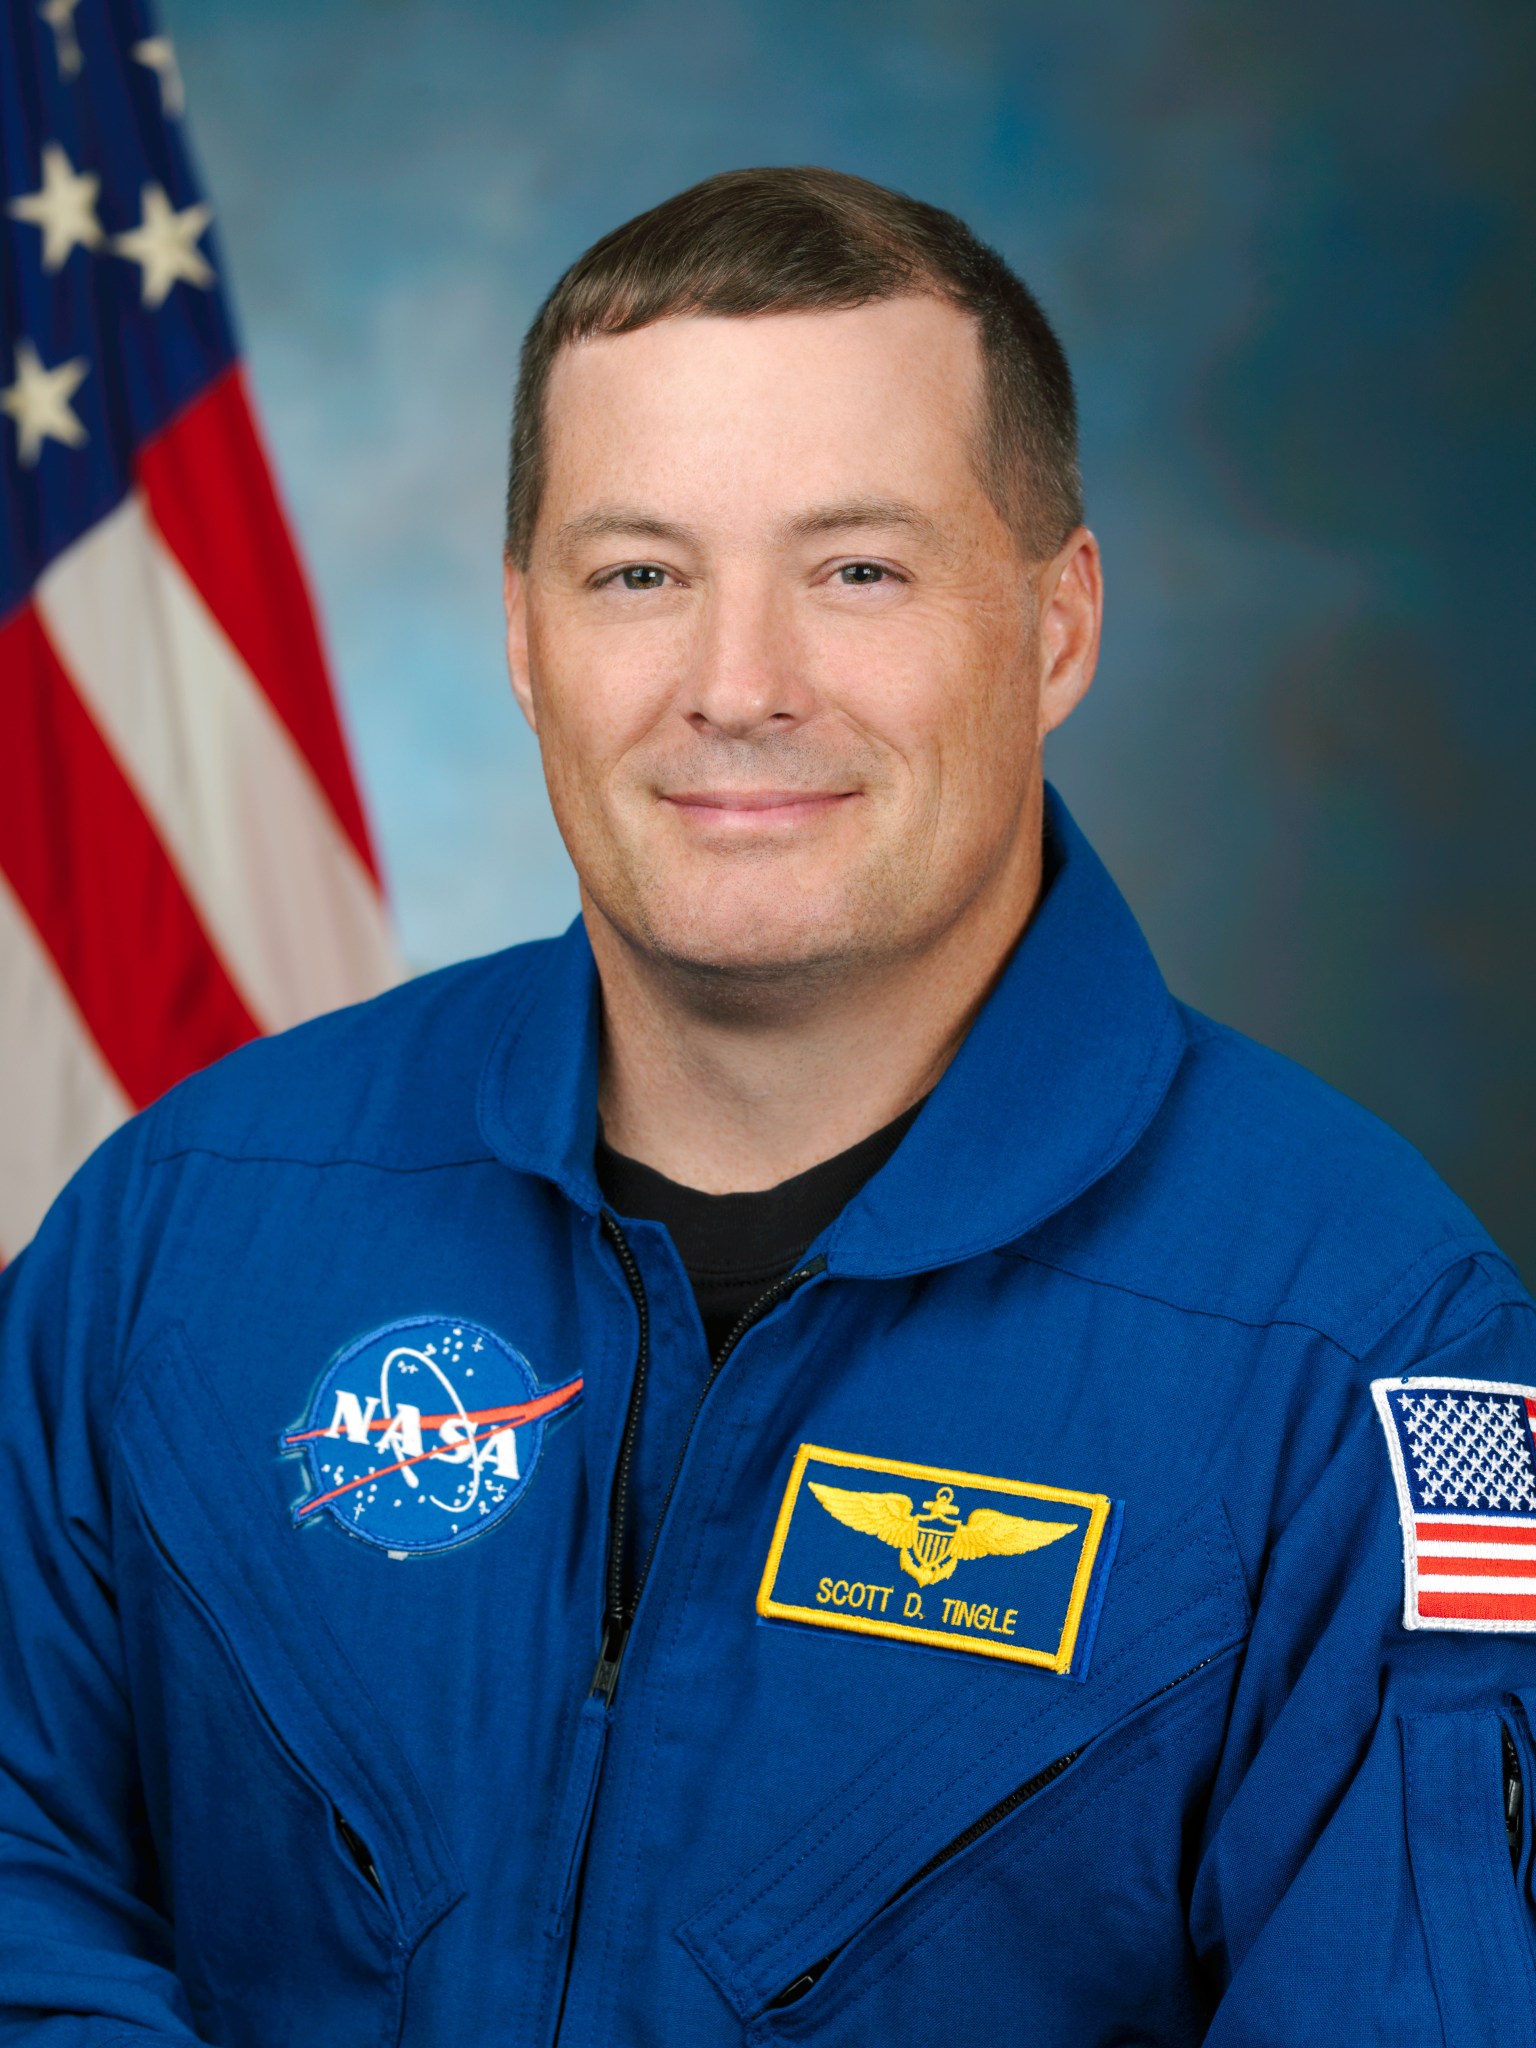 NASA astronaut Scott Tingle 